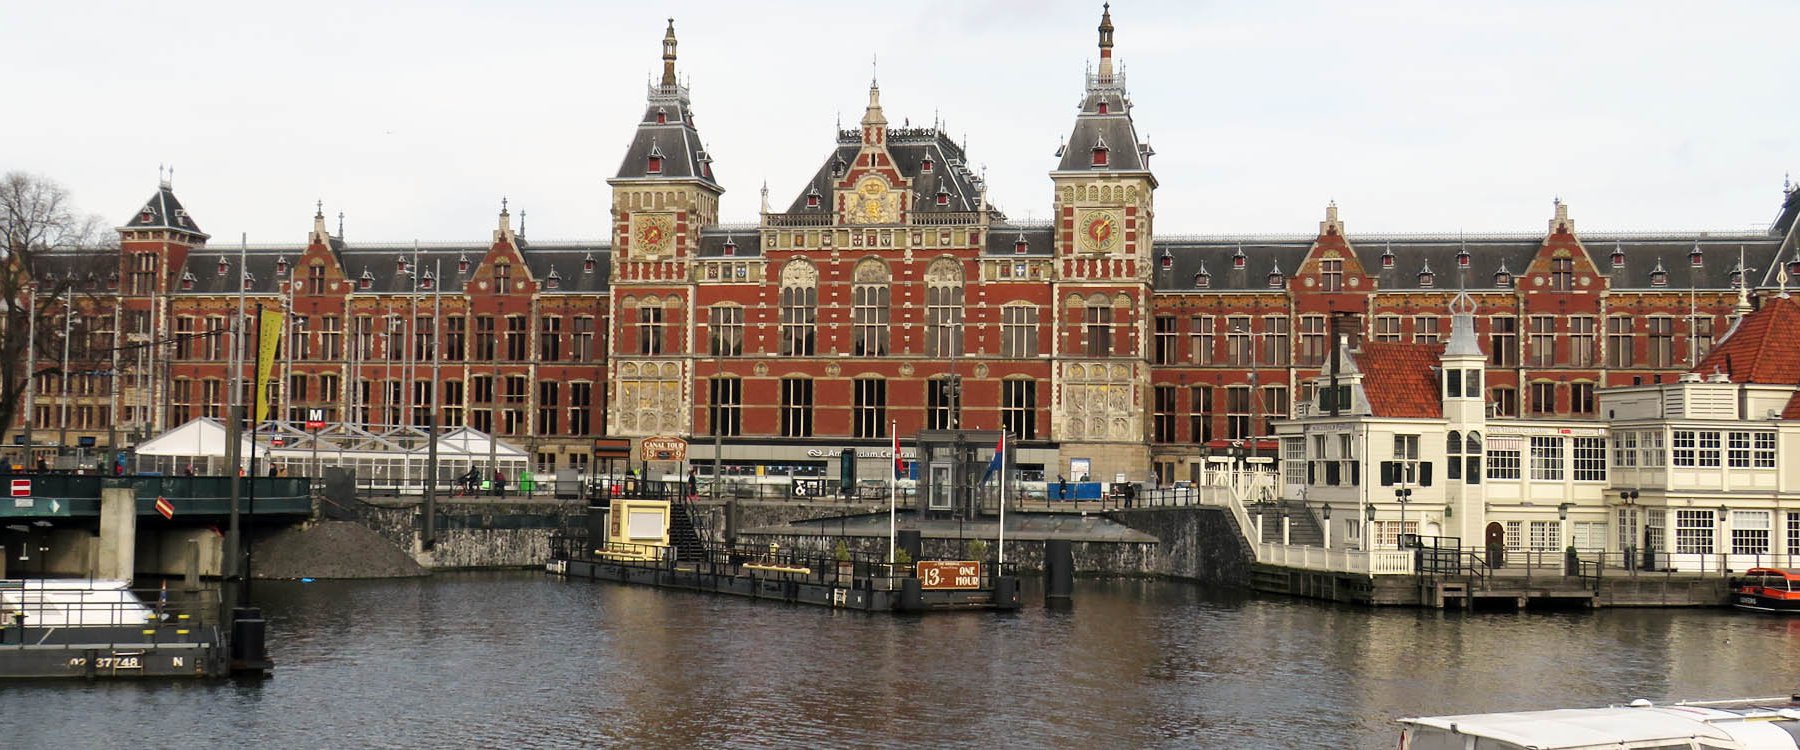 Amsterdam regio tours2.jpg